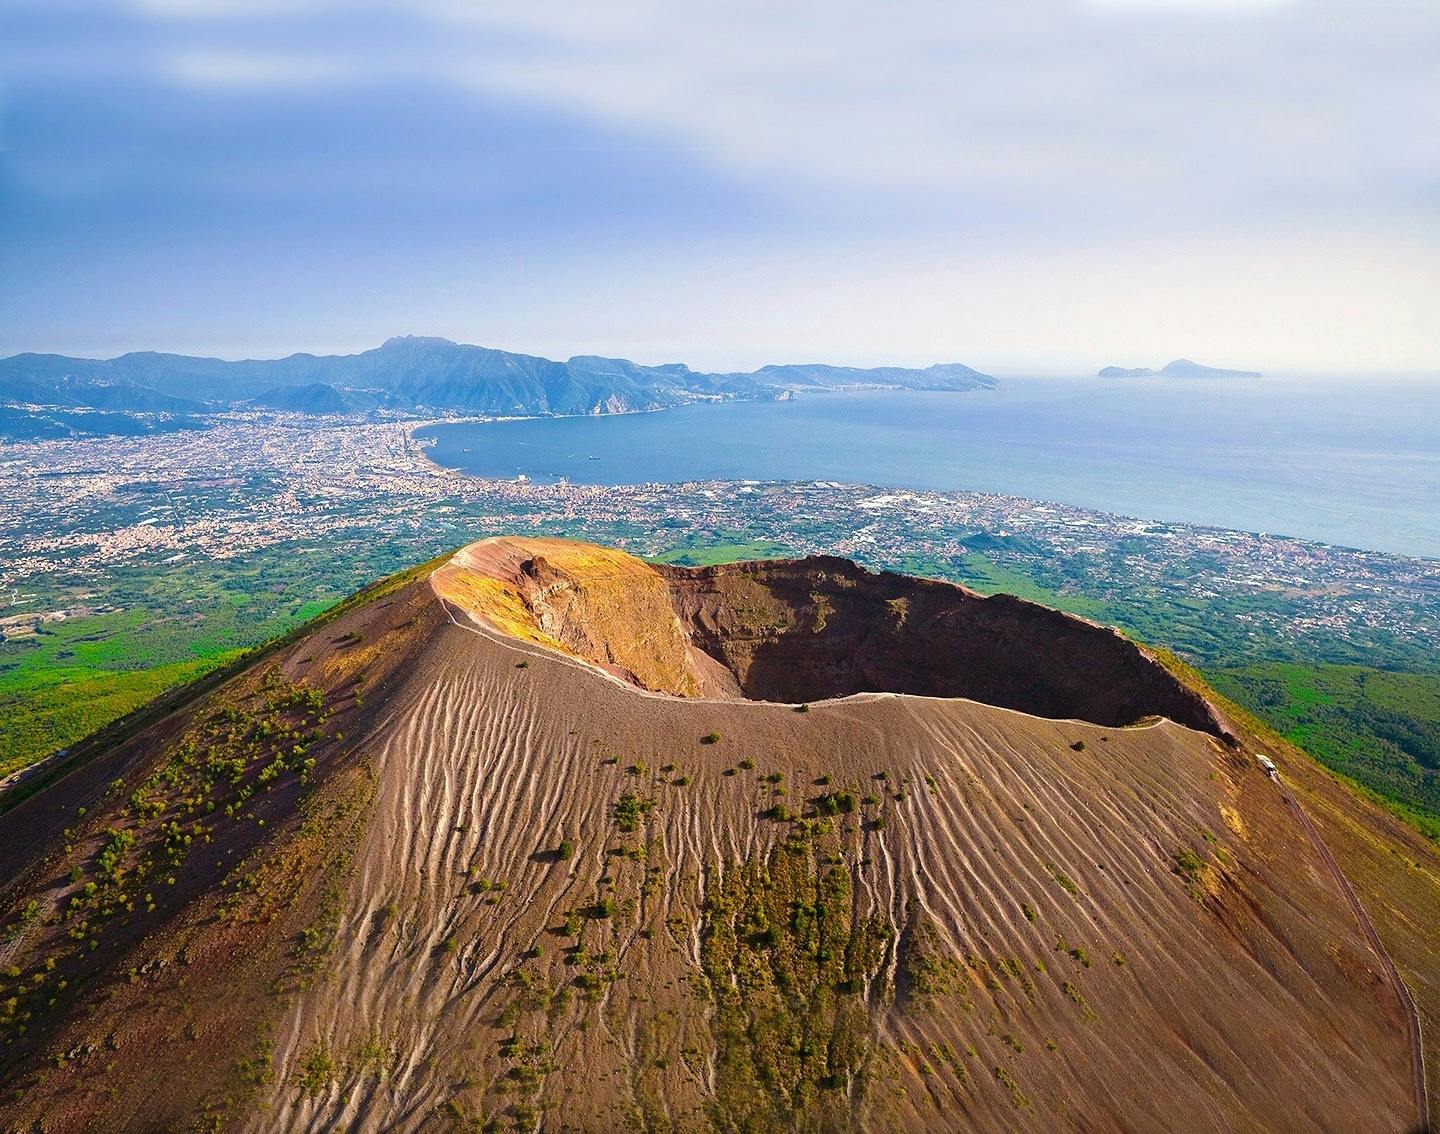 Vesuv- und Pompeji-Tour mit Audioguide ab Salerno